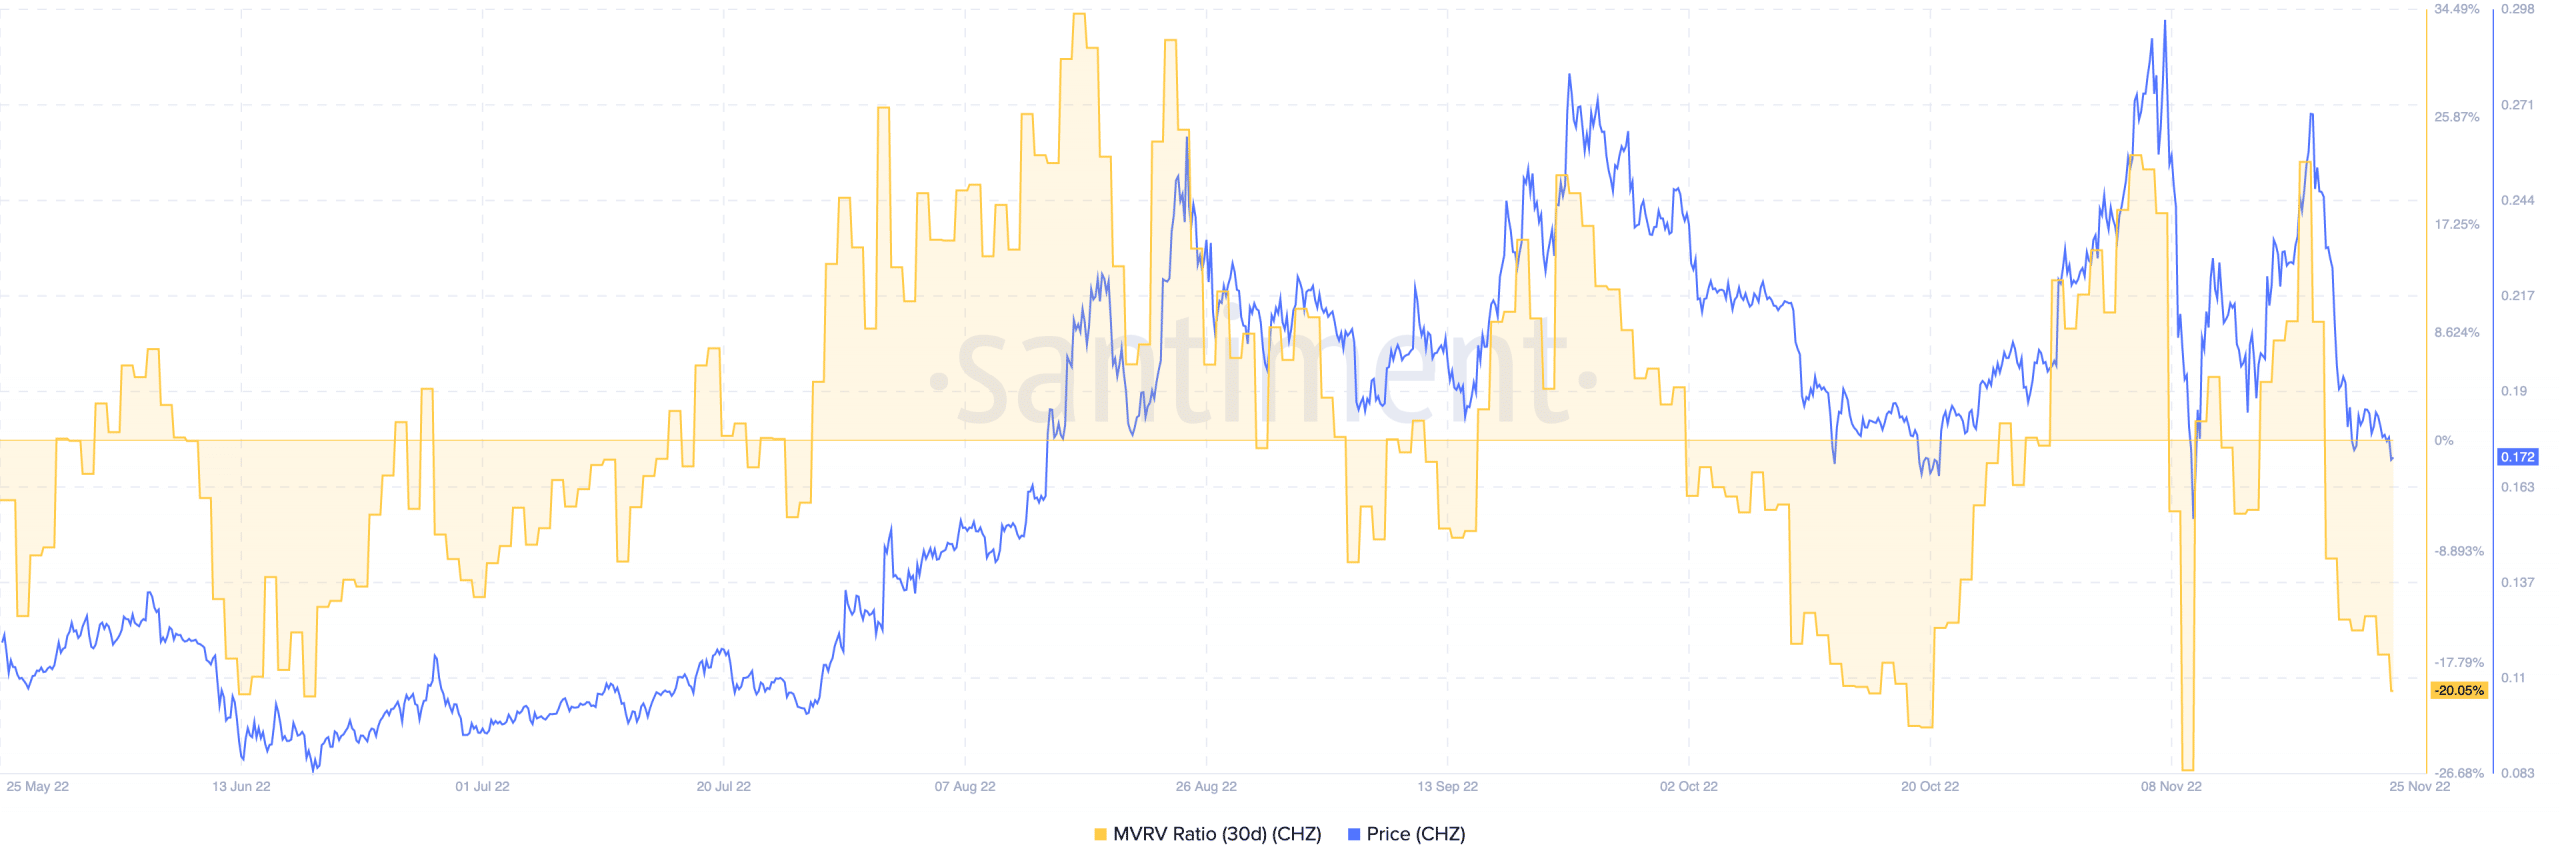 Chiliz price and MVRV ratio